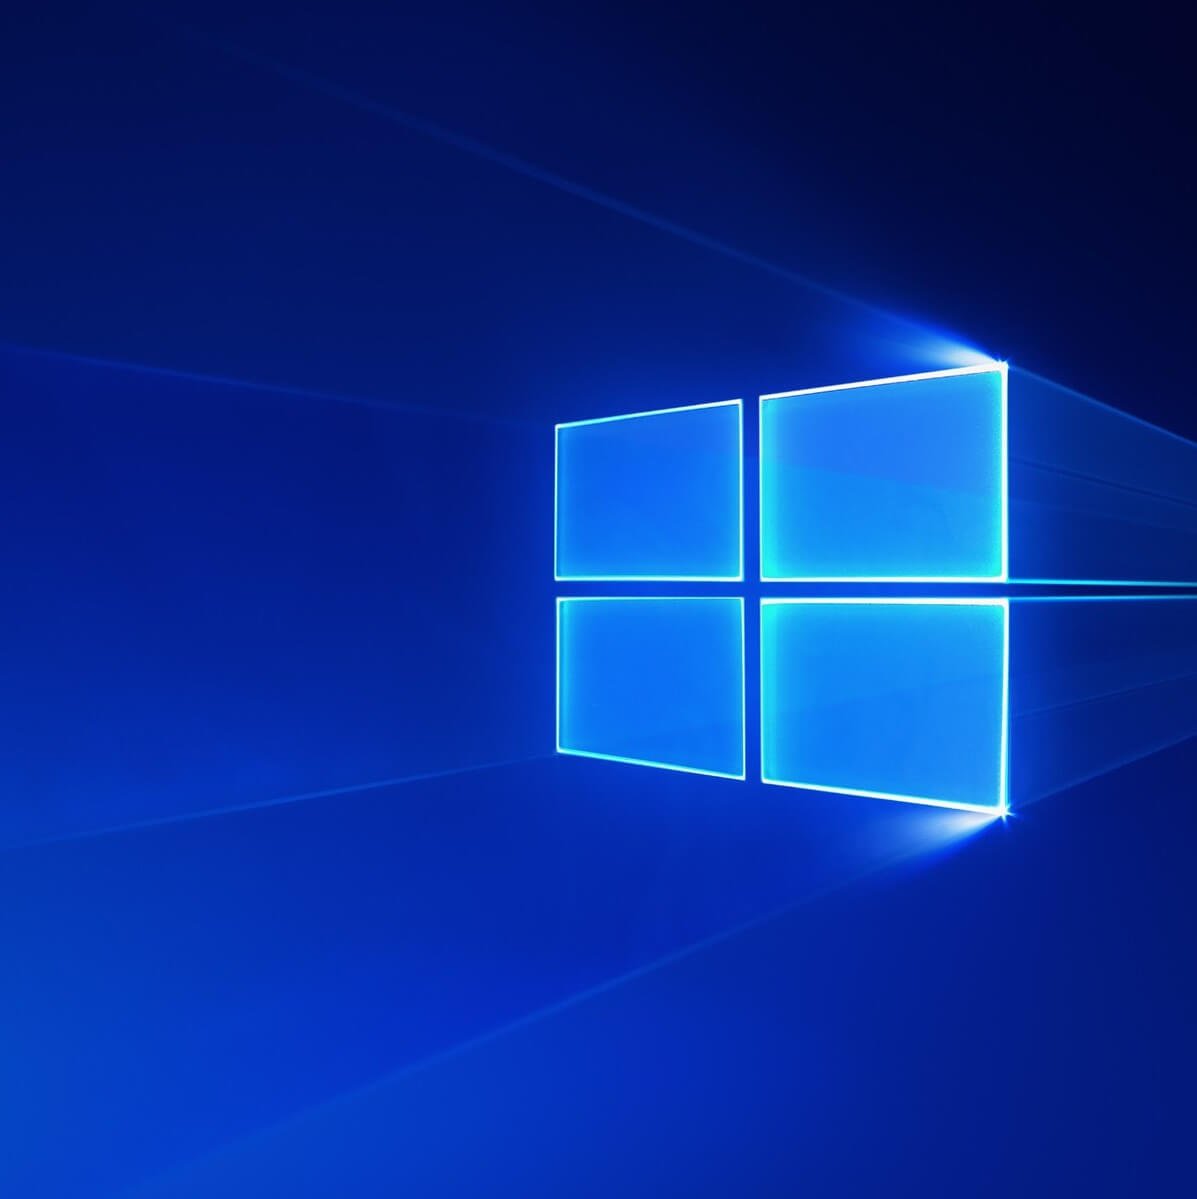 Windows 10 freezes randomly: 7 sure solutions to fix this